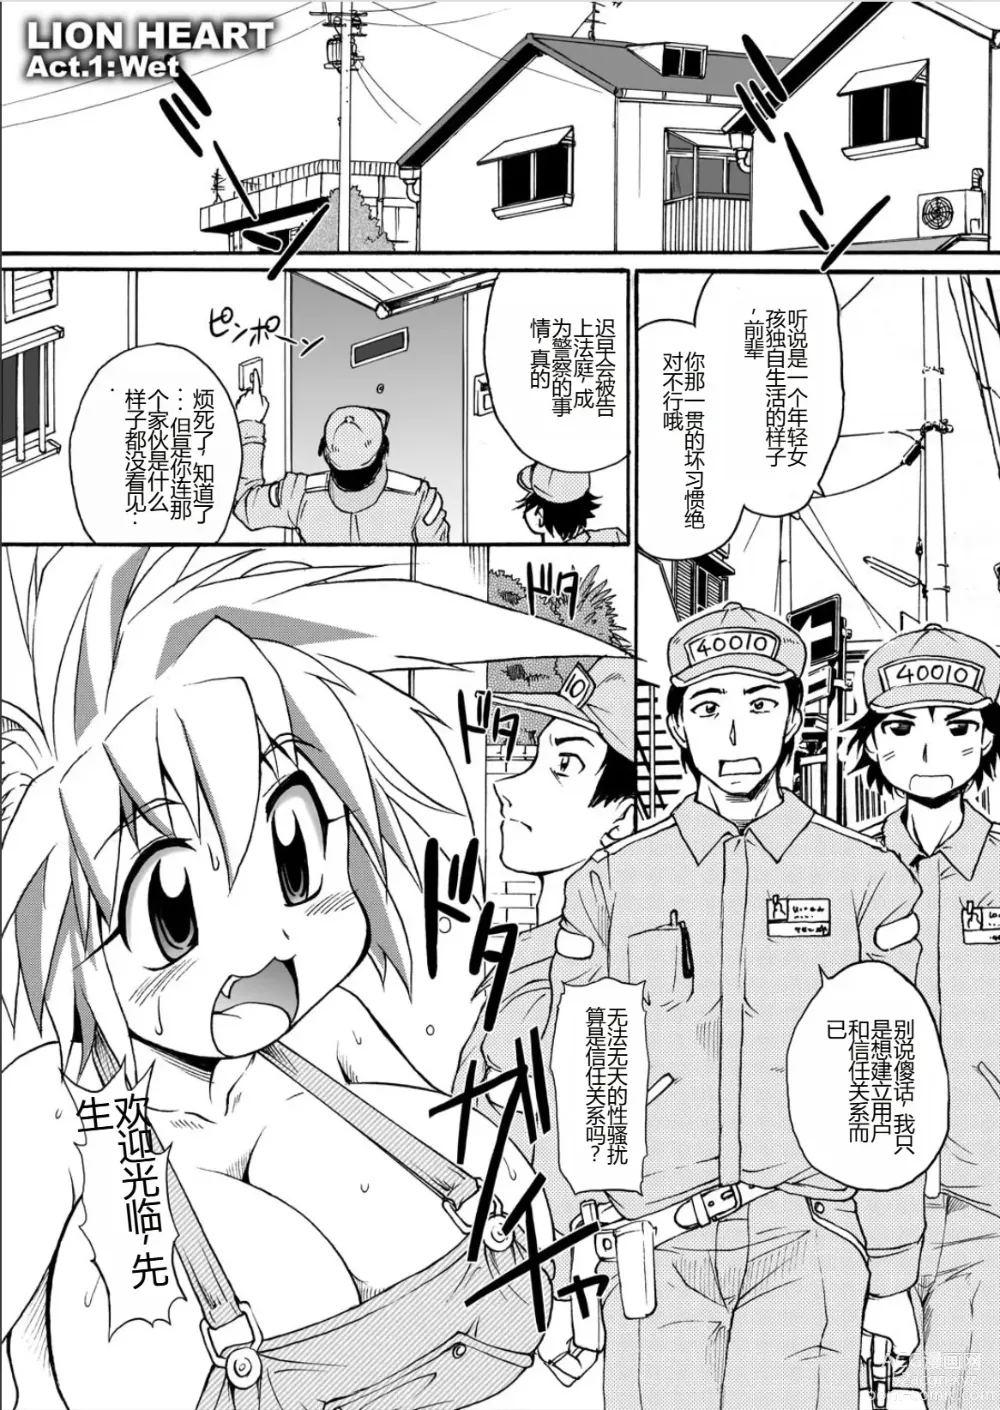 Page 3 of manga Lion Heart